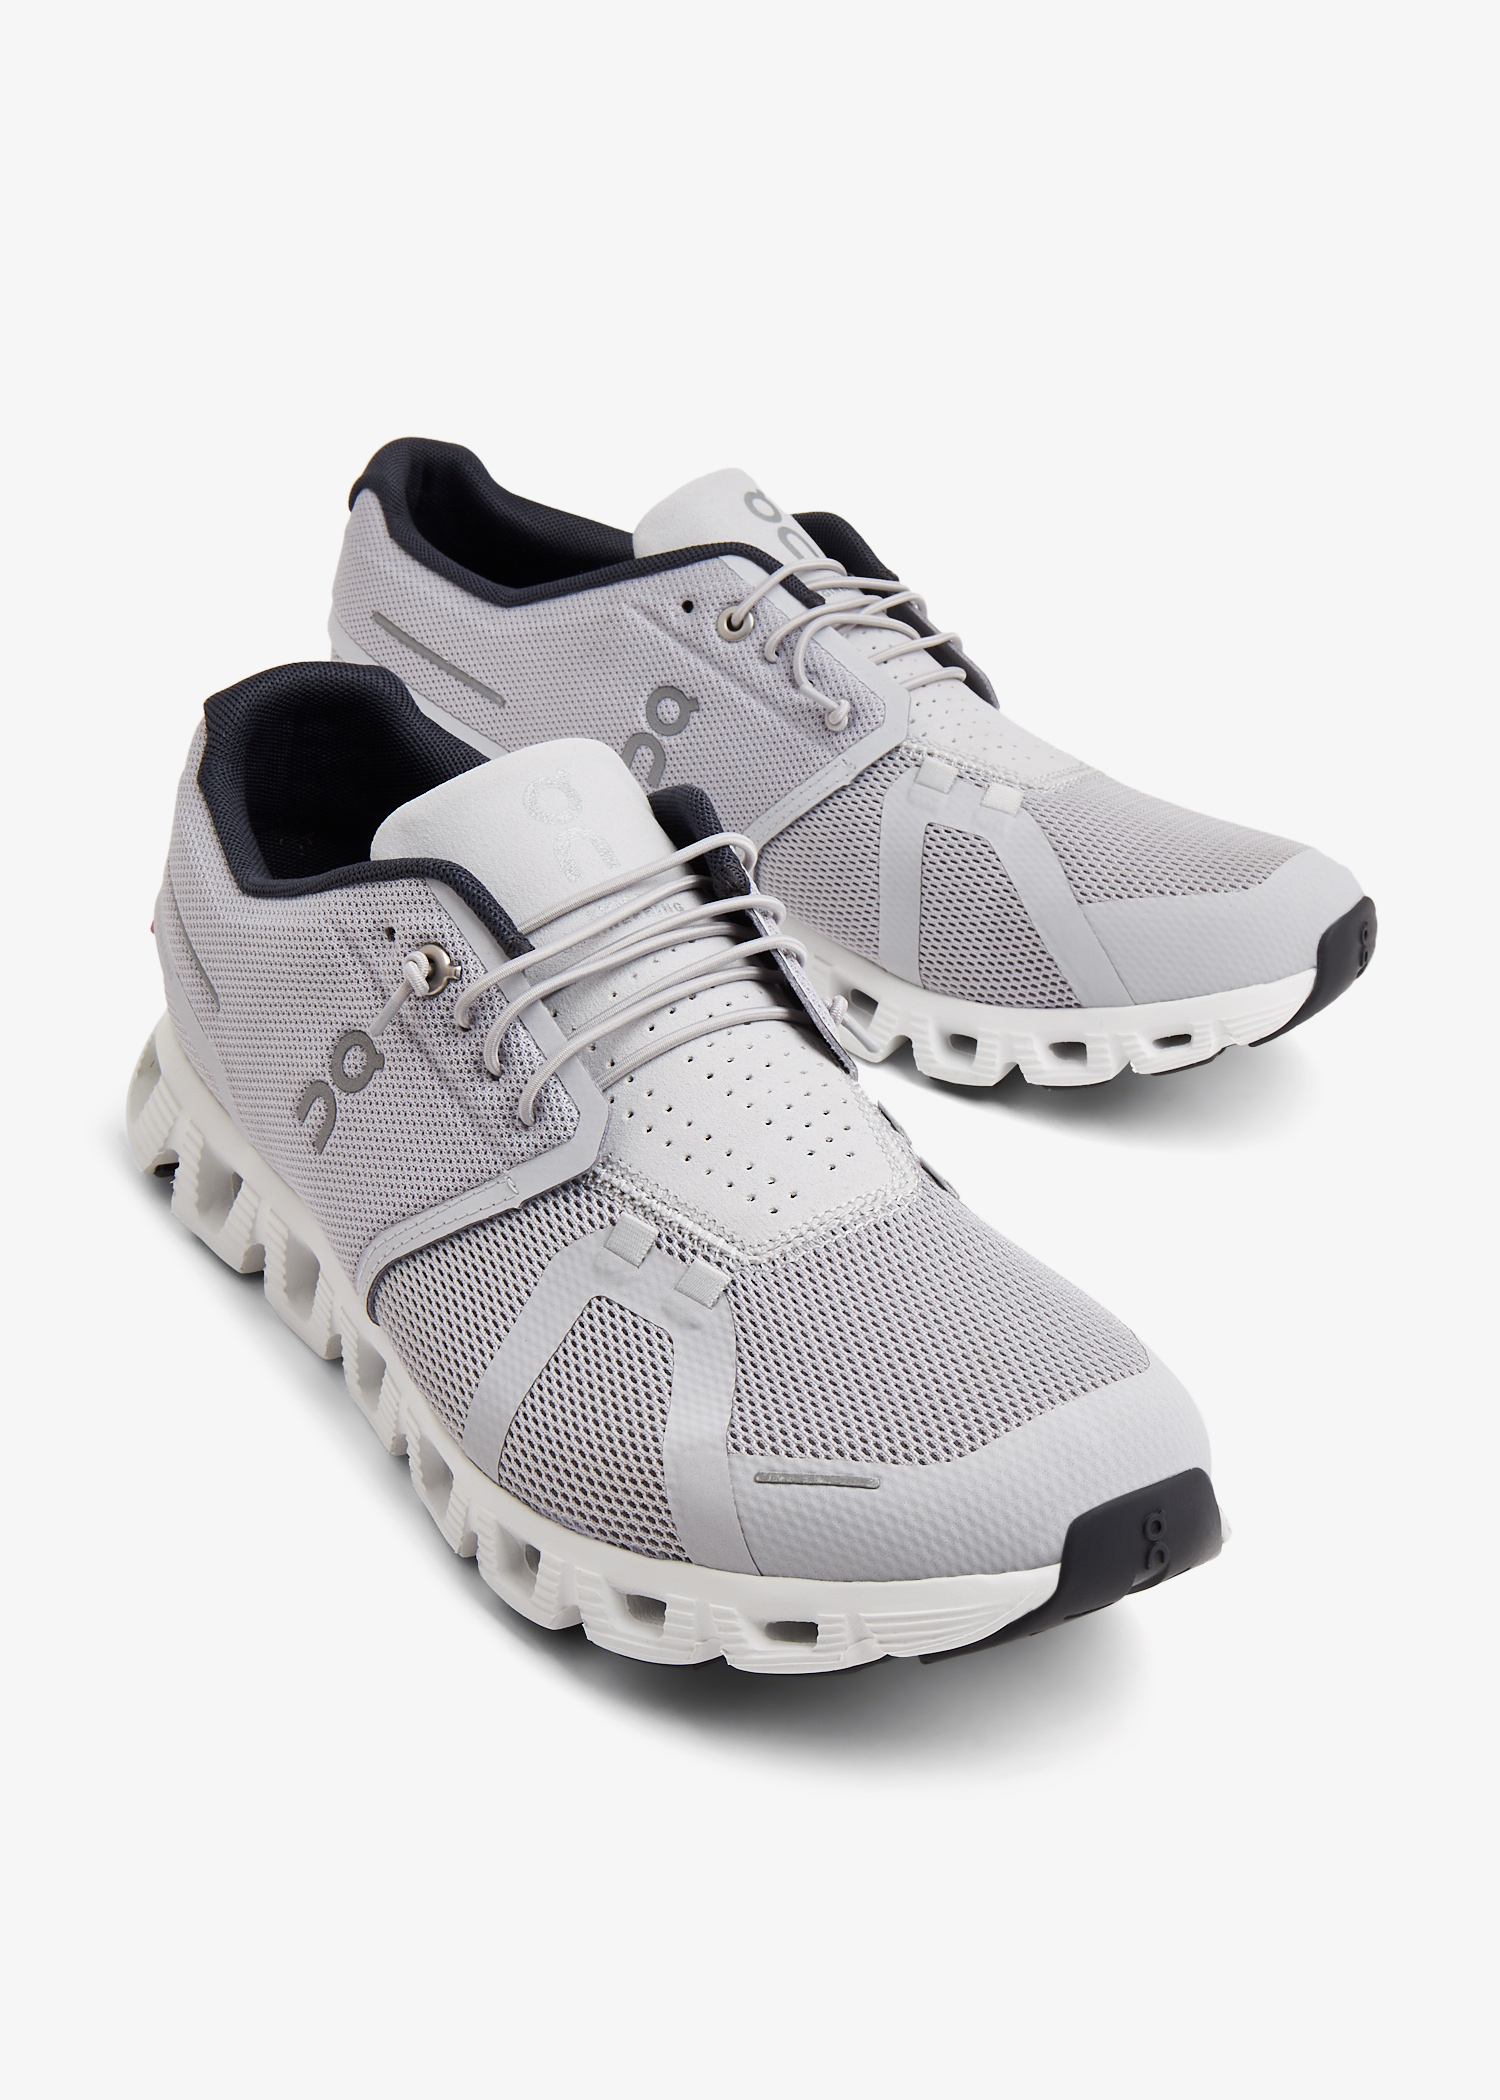 On Cloud 5 sneakers for Men - Grey in KSA | Level Shoes